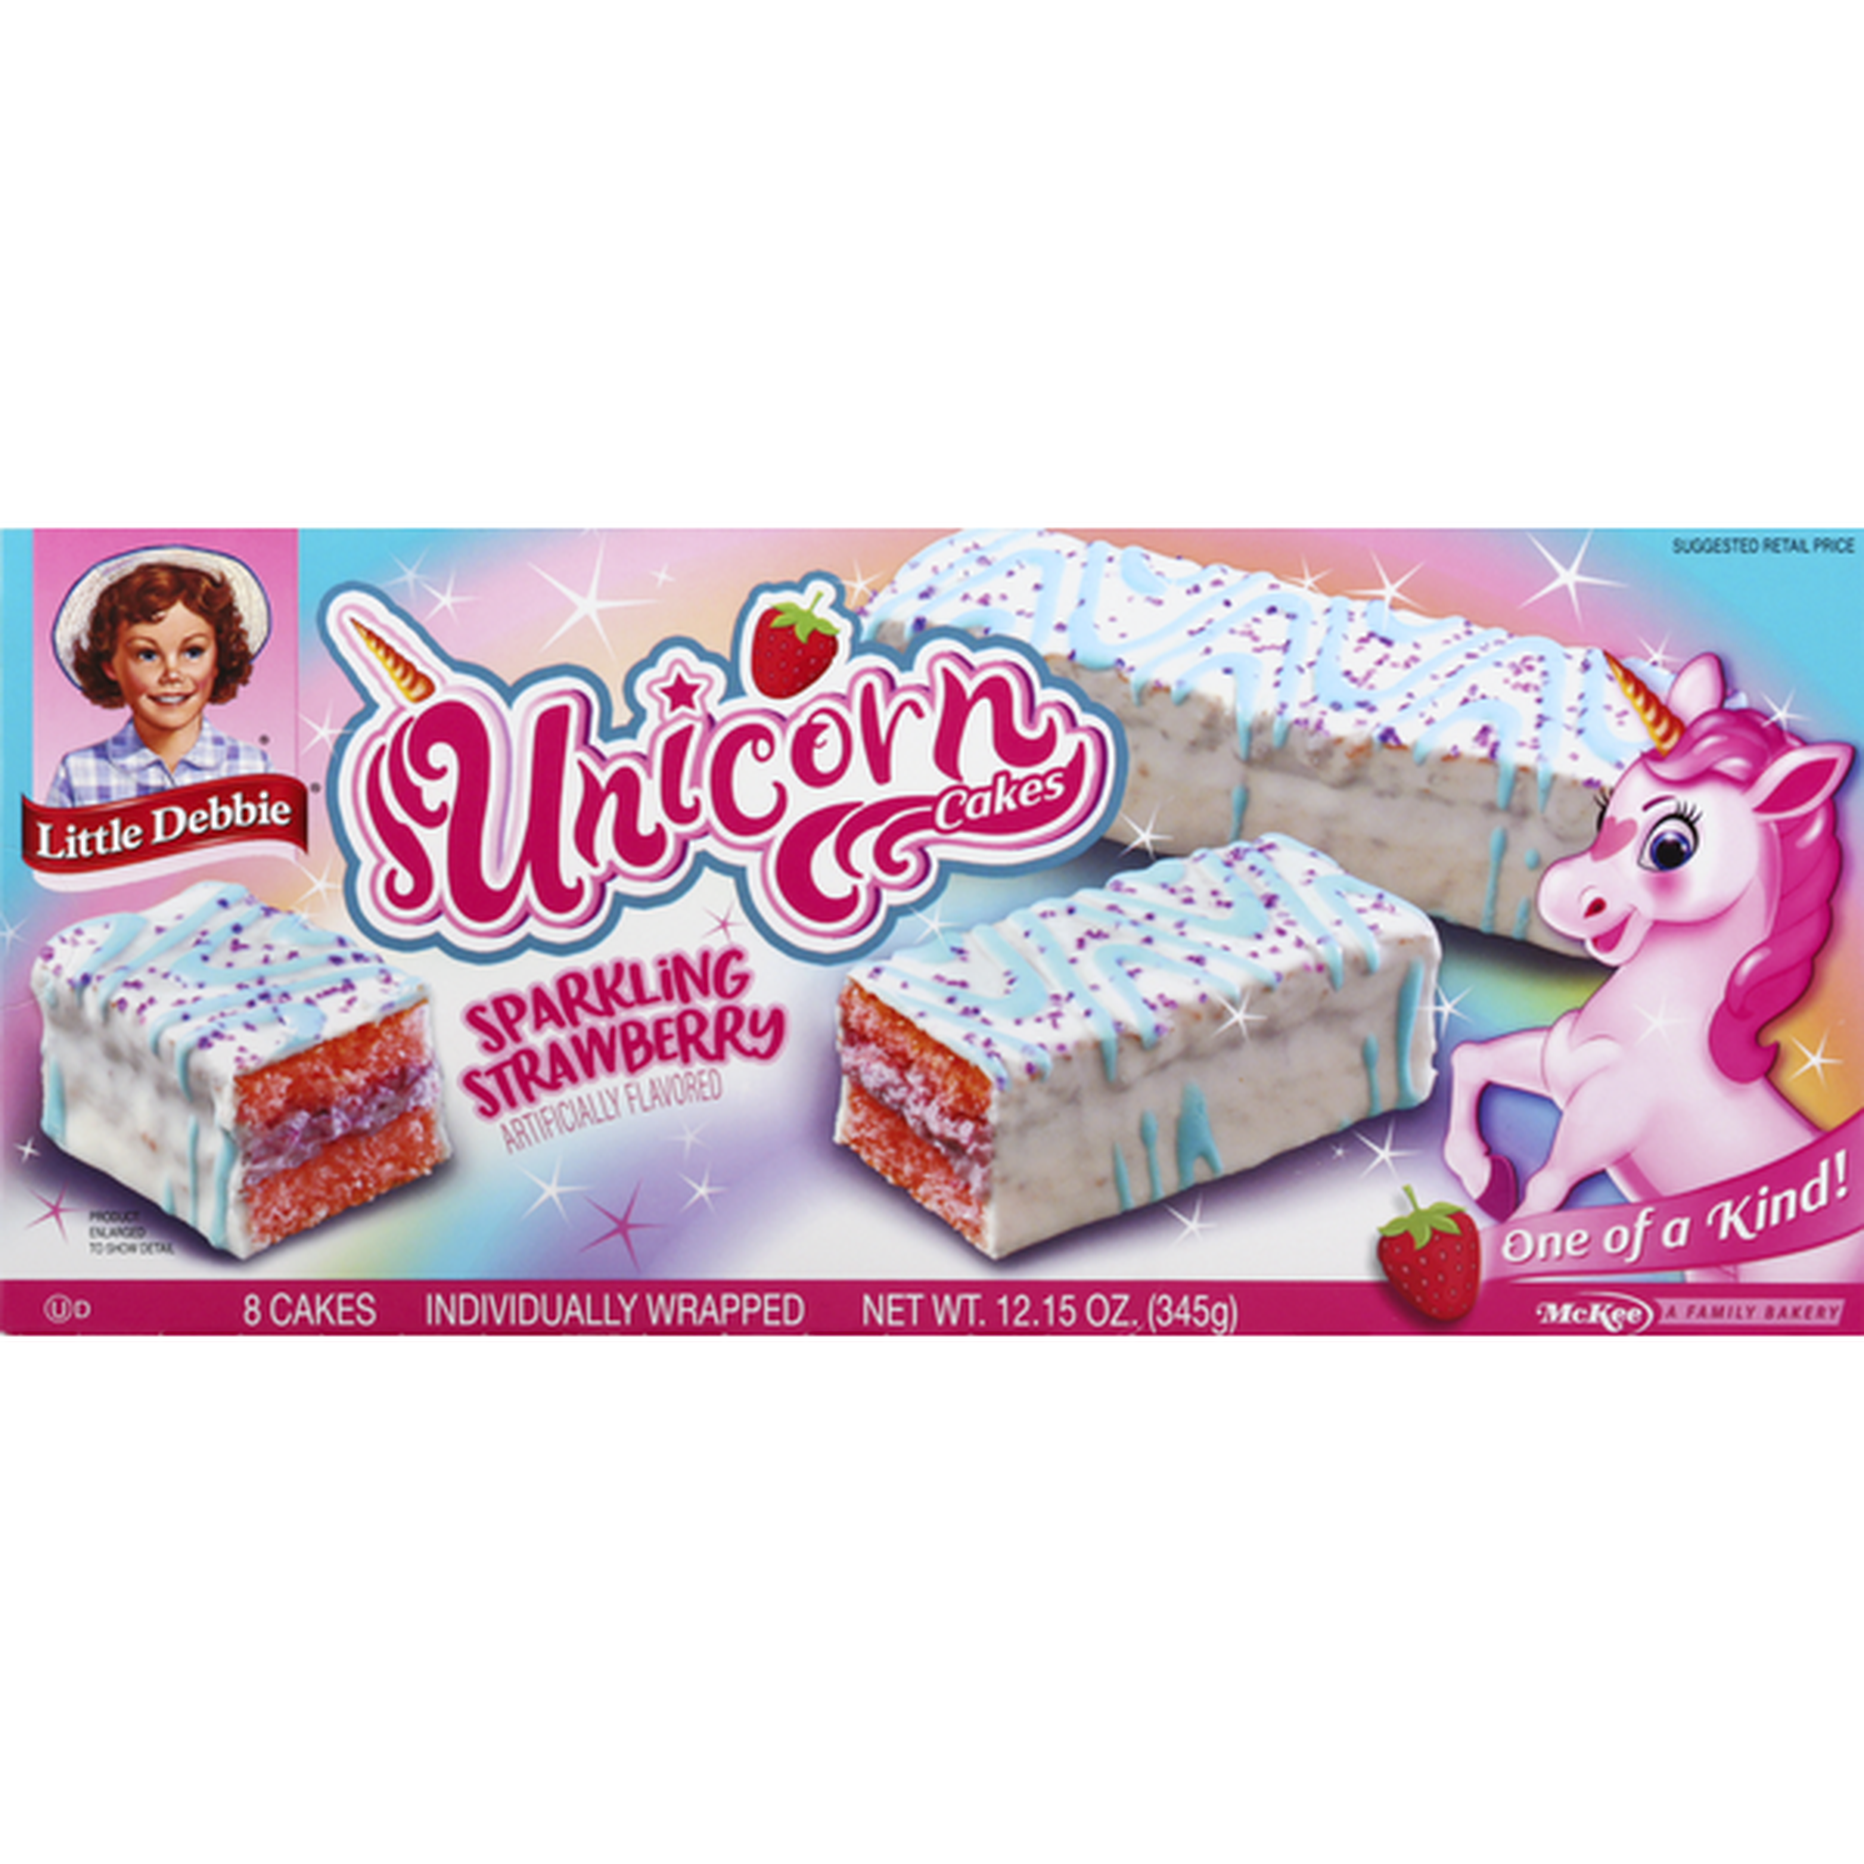 Little Debbie Unicorn Cakes, Sparkling Strawberry (12.15 oz) Delivery ...